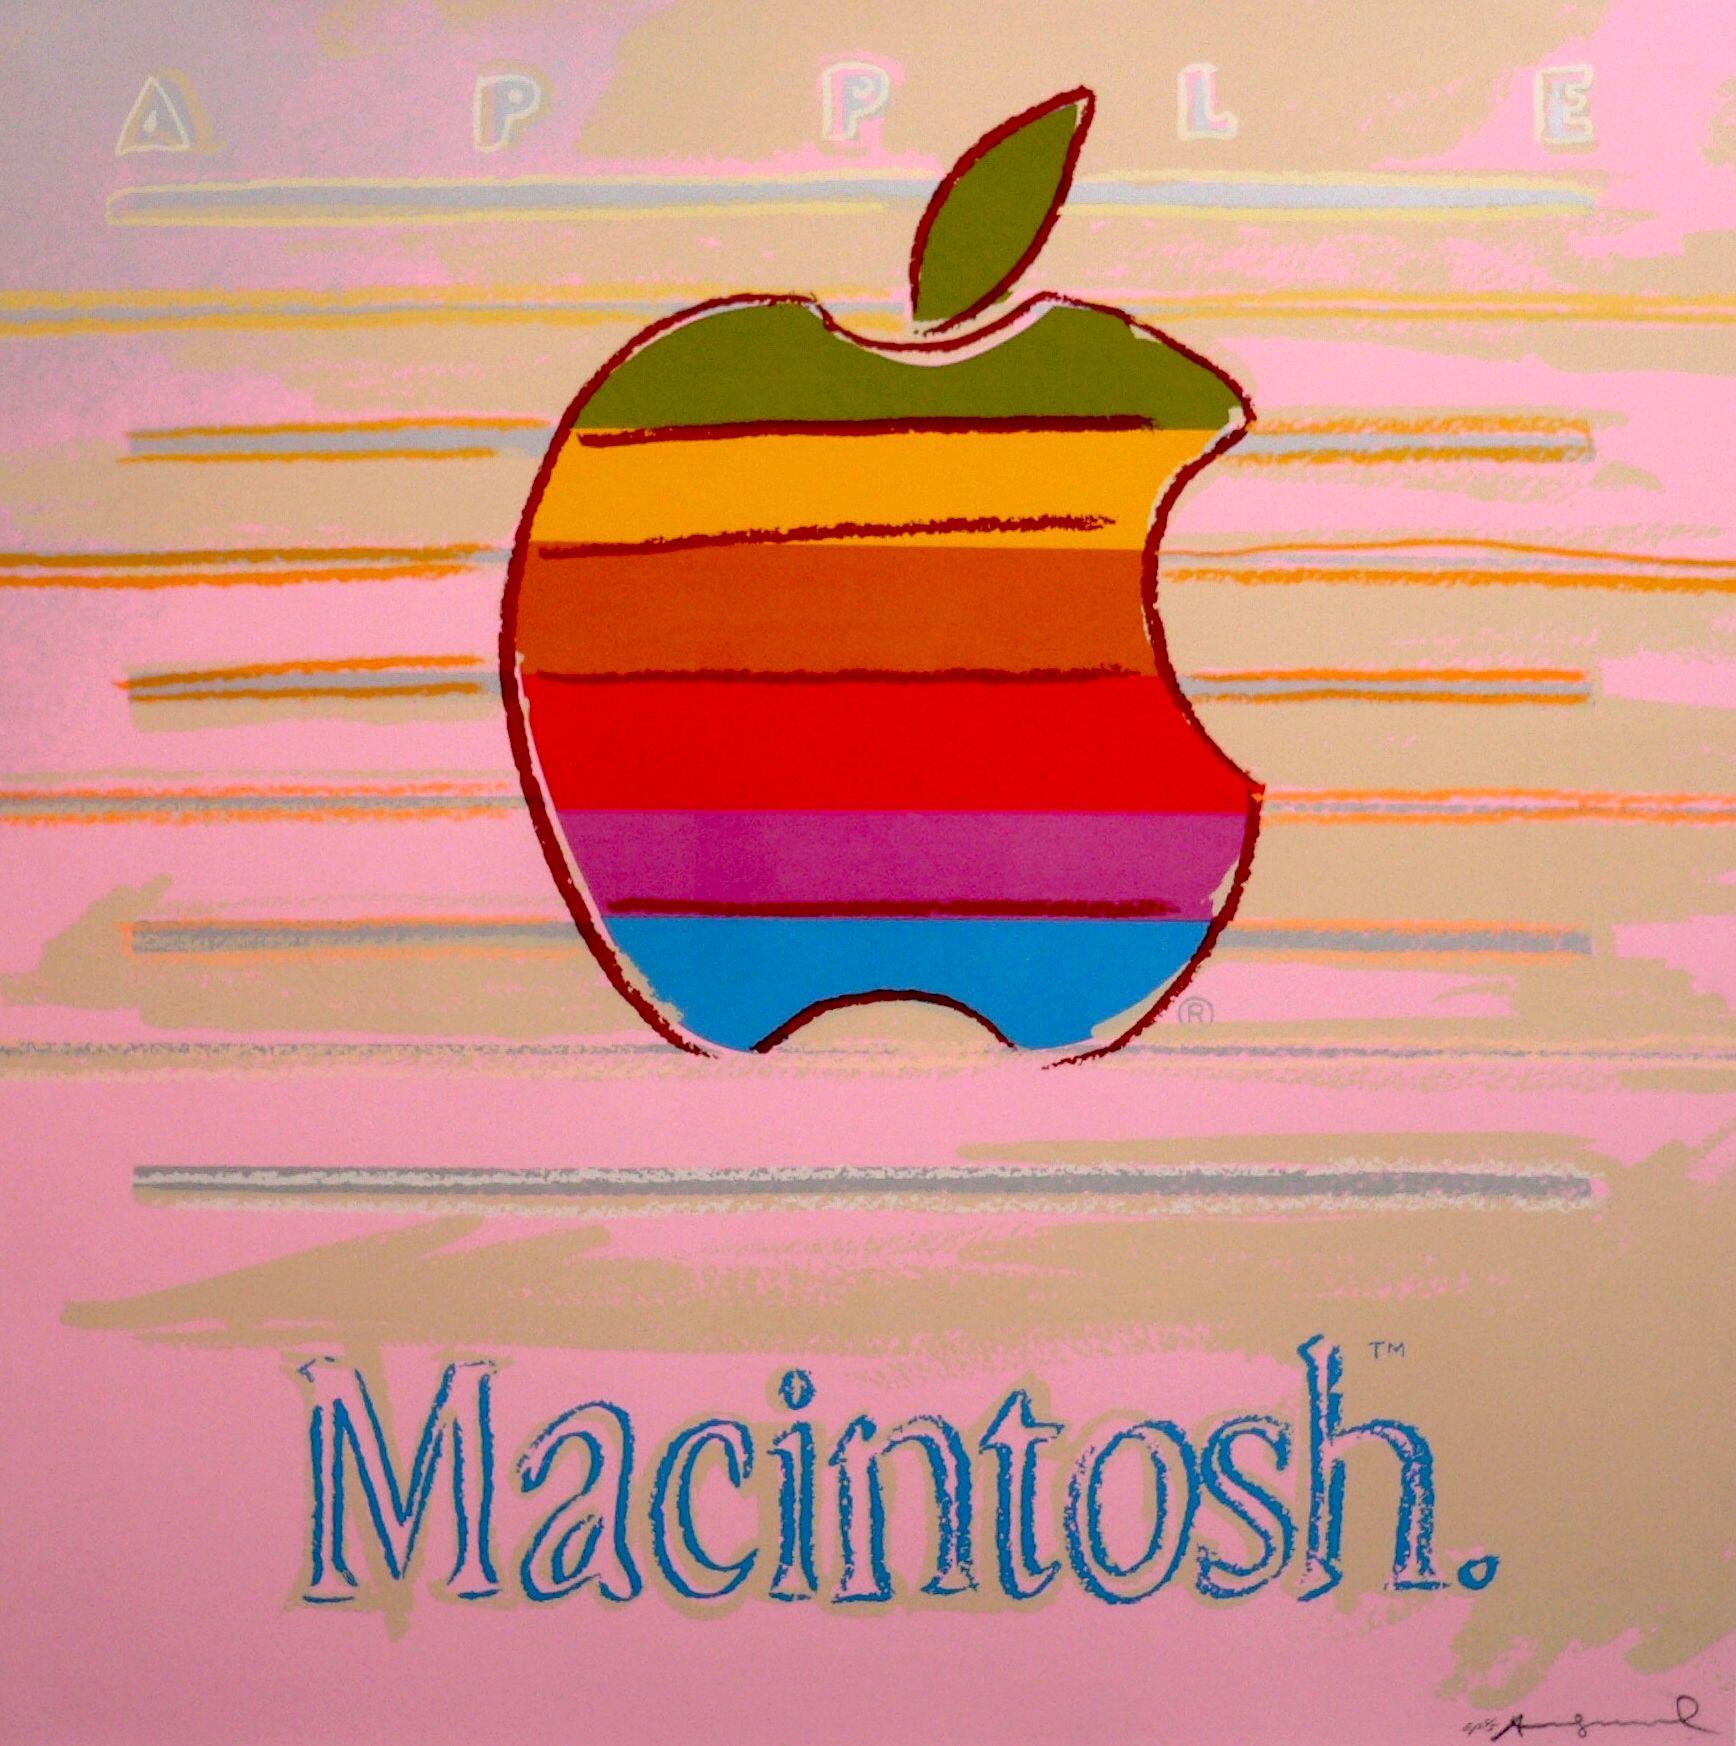 Andy Warhol Logo - Apple (Macintosh) by Andy Warhol - Guy Hepner